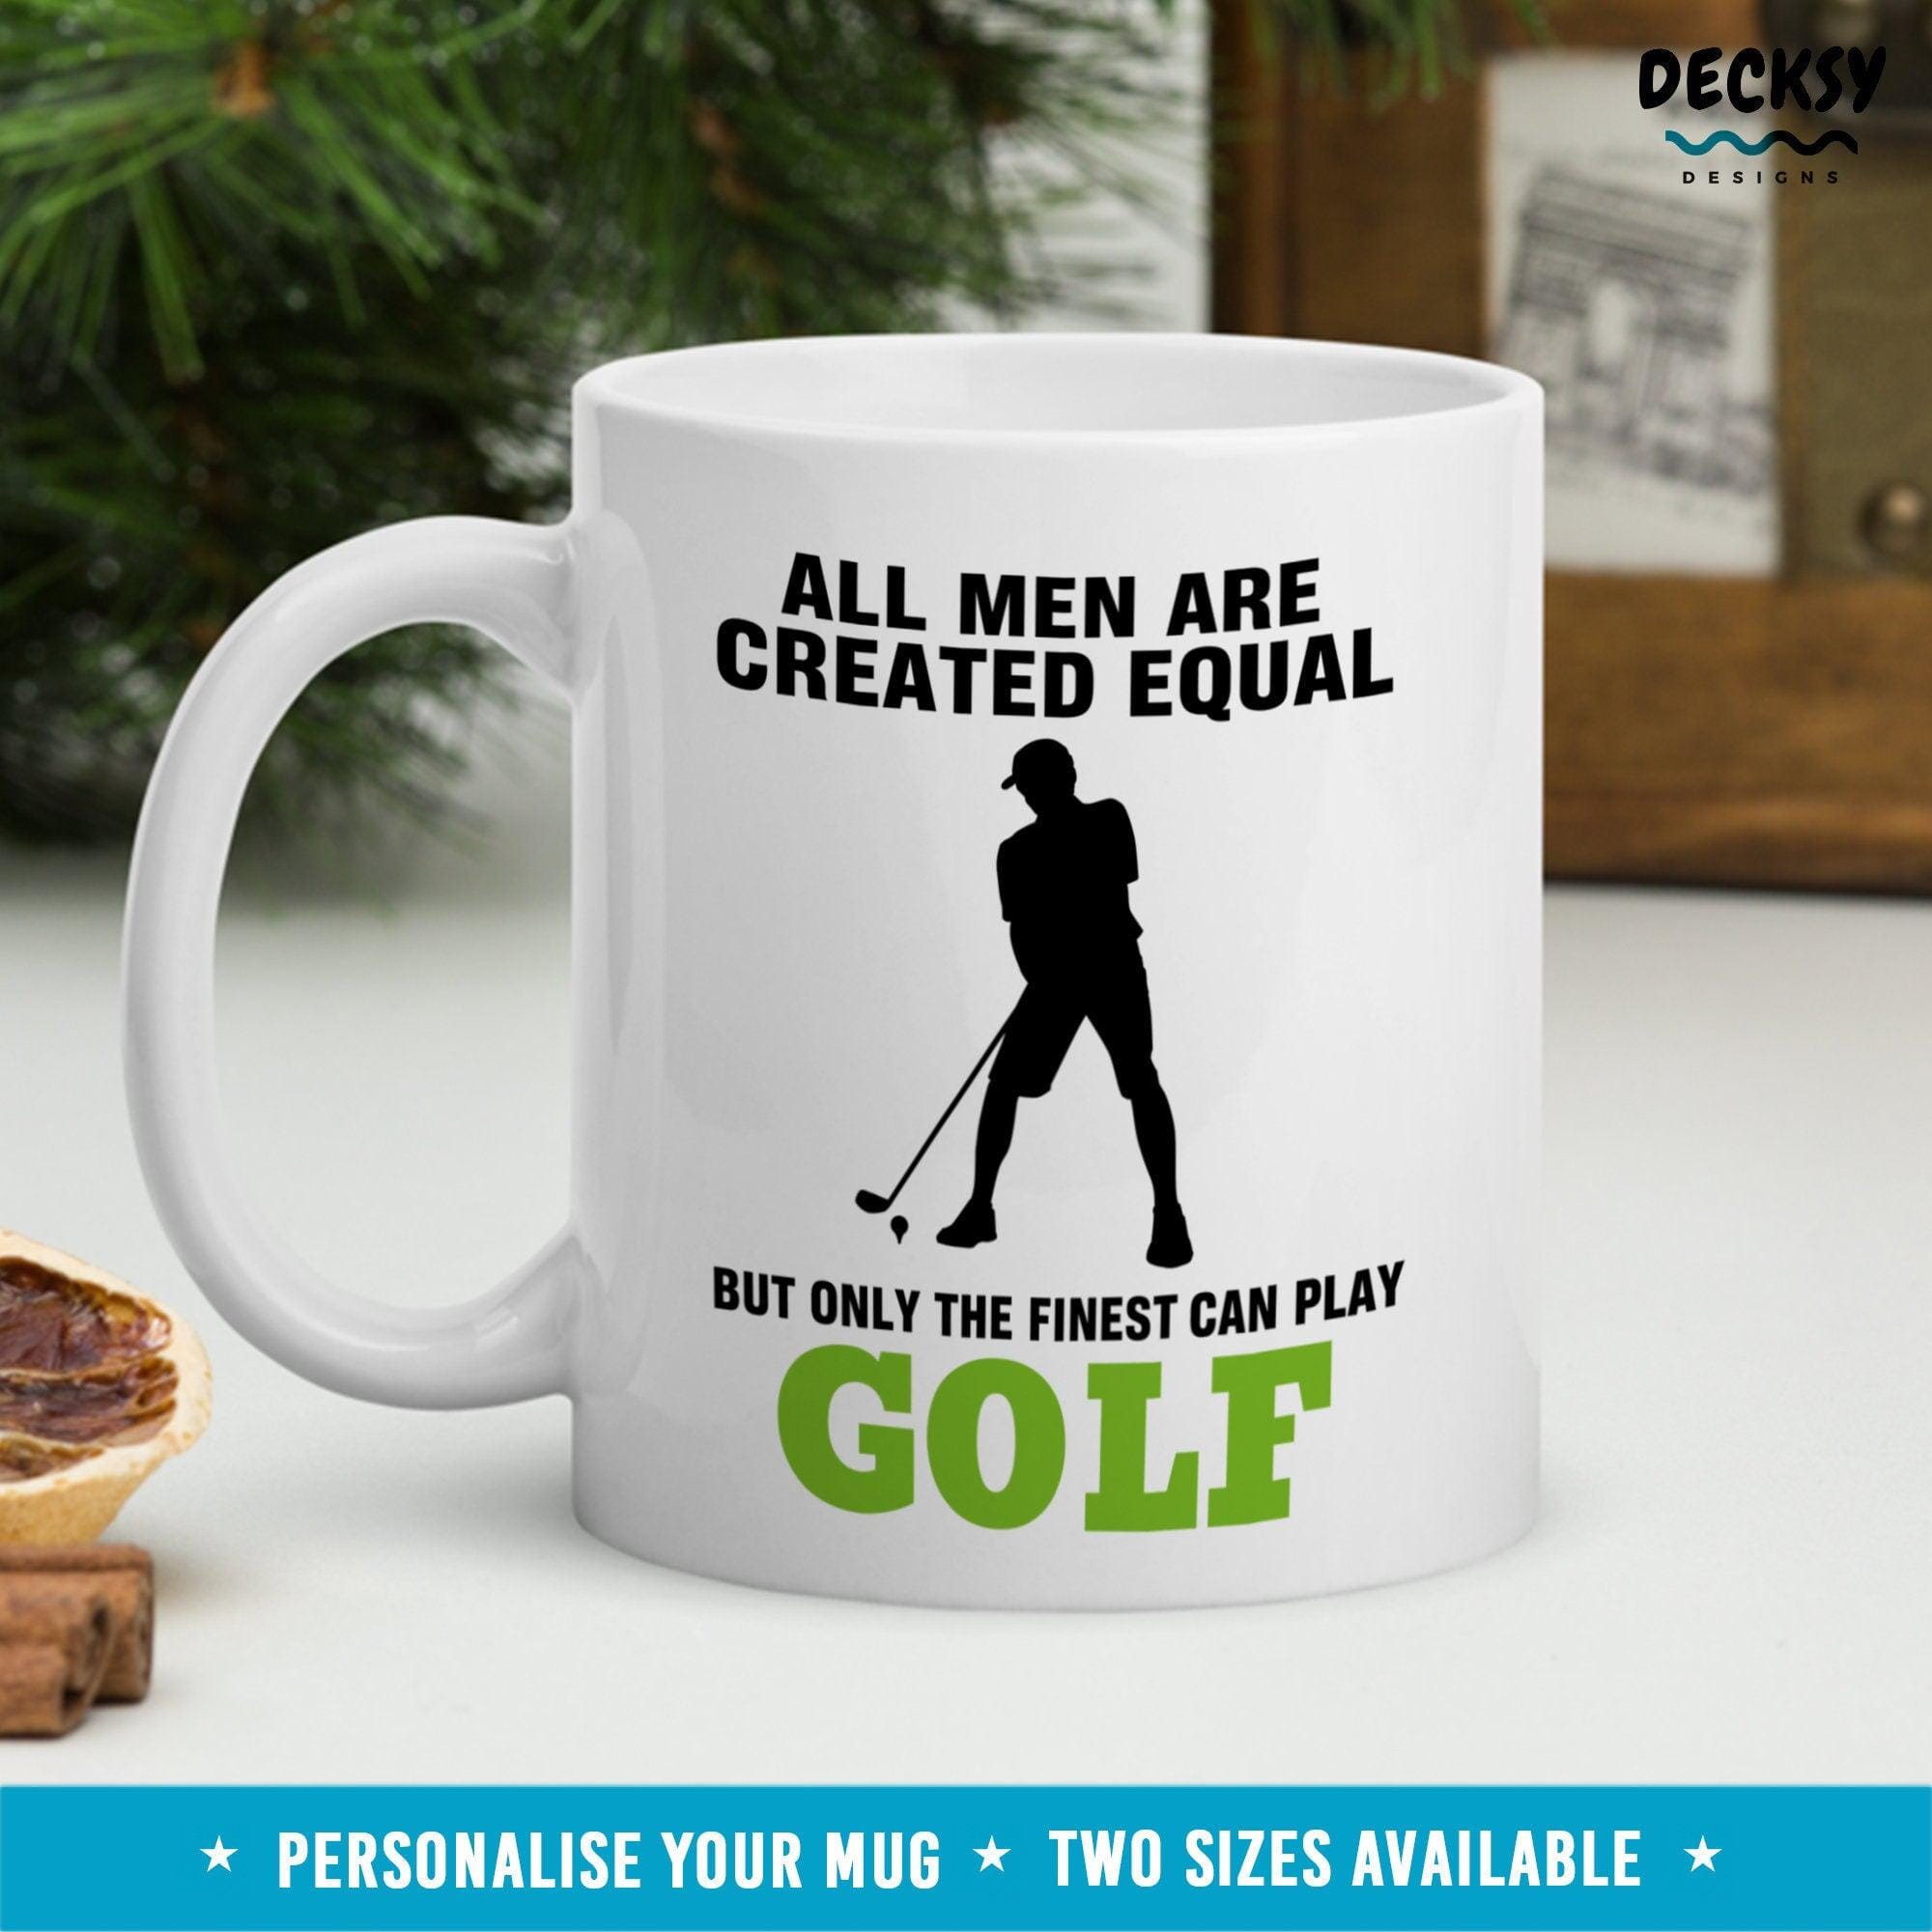 Golf Mug For Men, Personalised Golfing Gift For Him-Home & Living:Kitchen & Dining:Drink & Barware:Drinkware:Mugs-DecksyDesigns-White Mug 11 oz-NO PERSONALISATION-DecksyDesigns